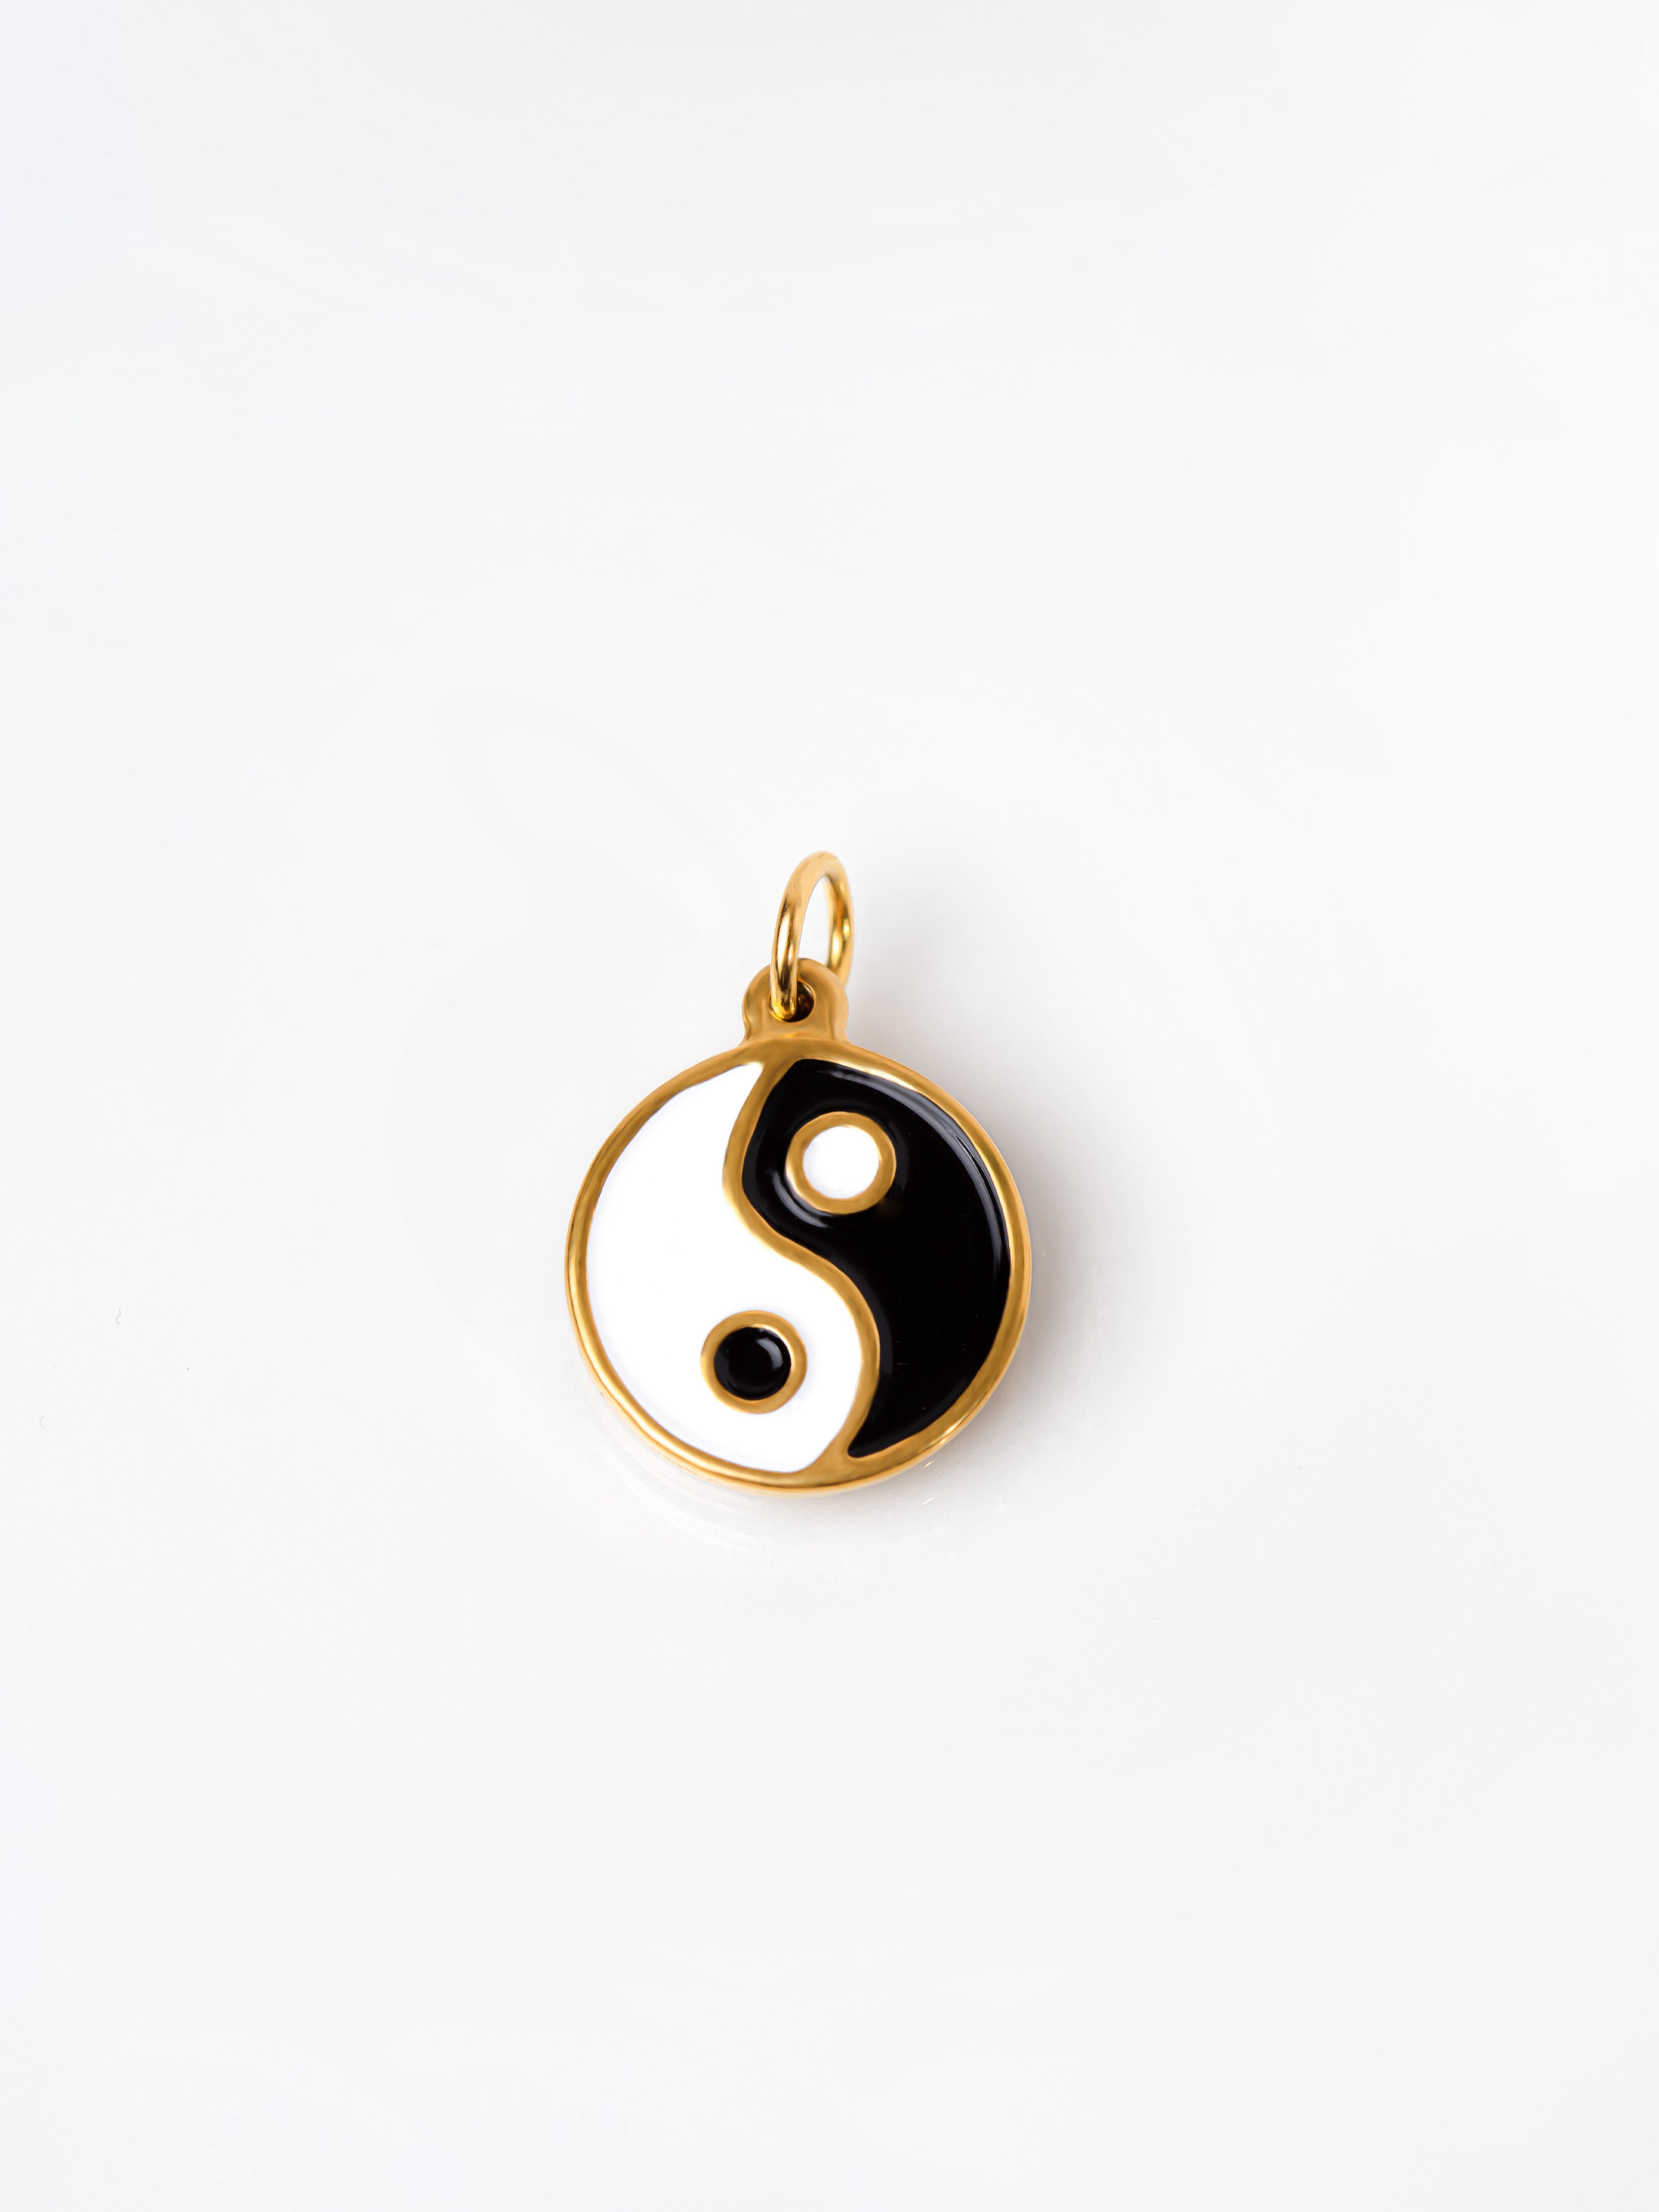 Gold Yin Yang Pendant / Charm